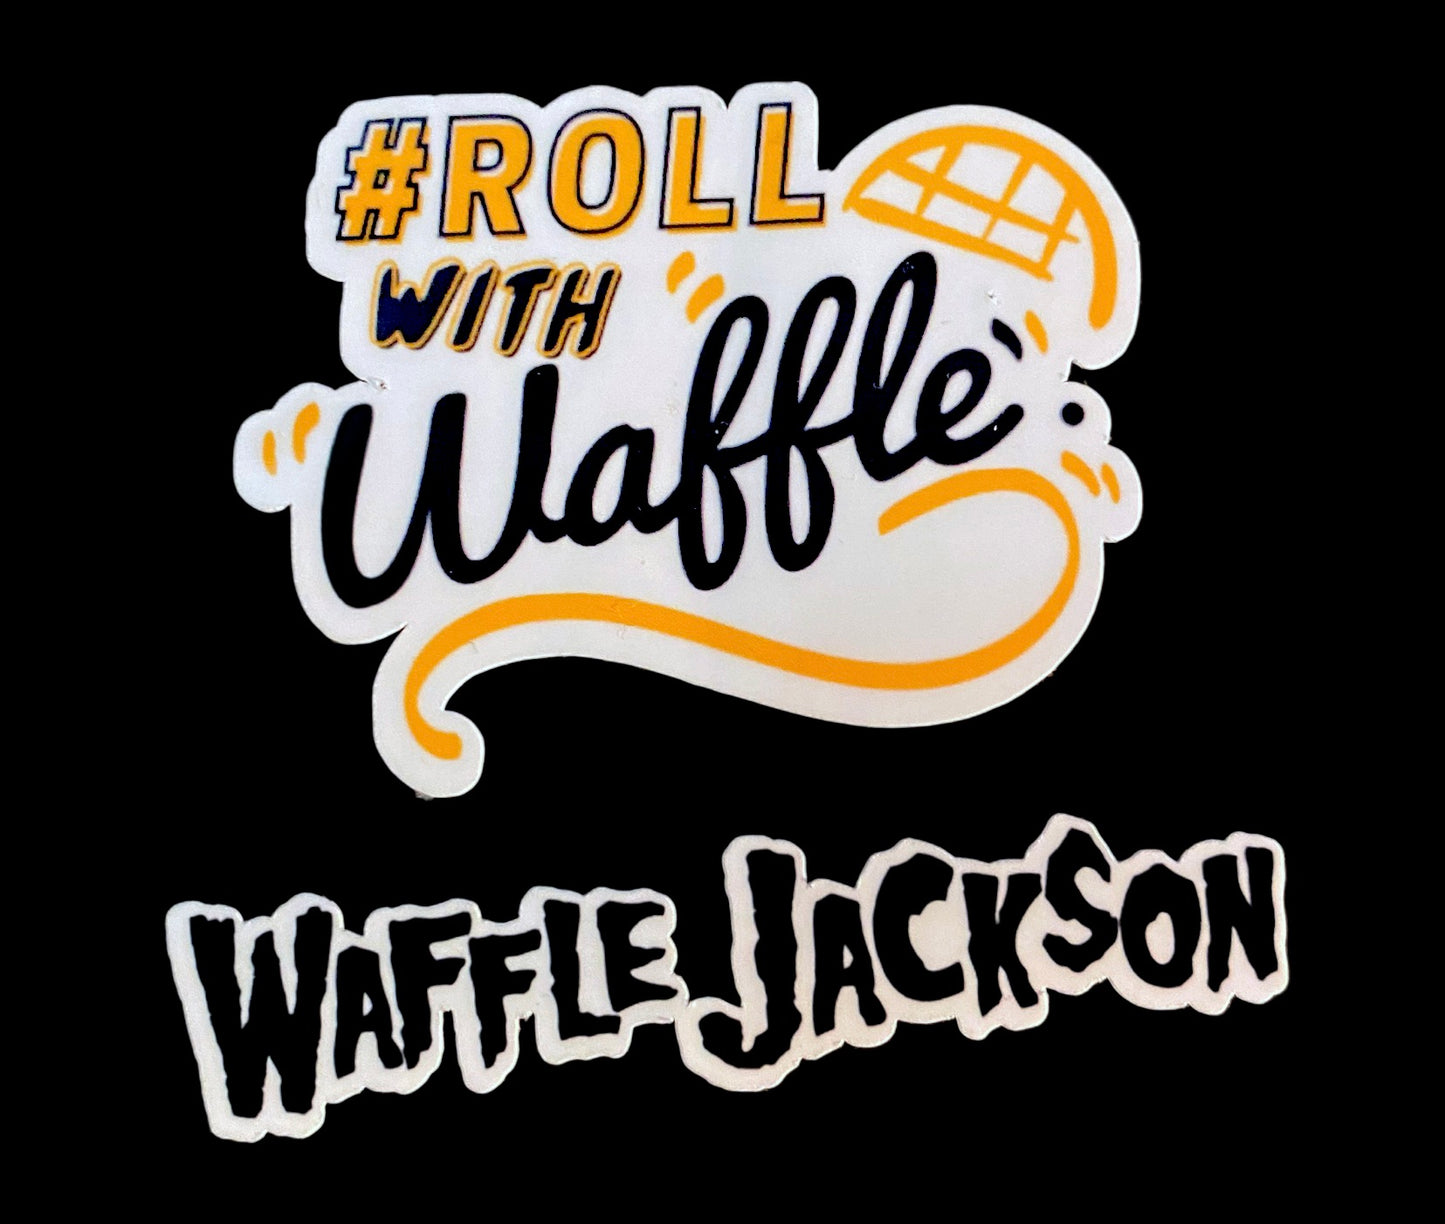 Waffle Jackson Sticker Pack